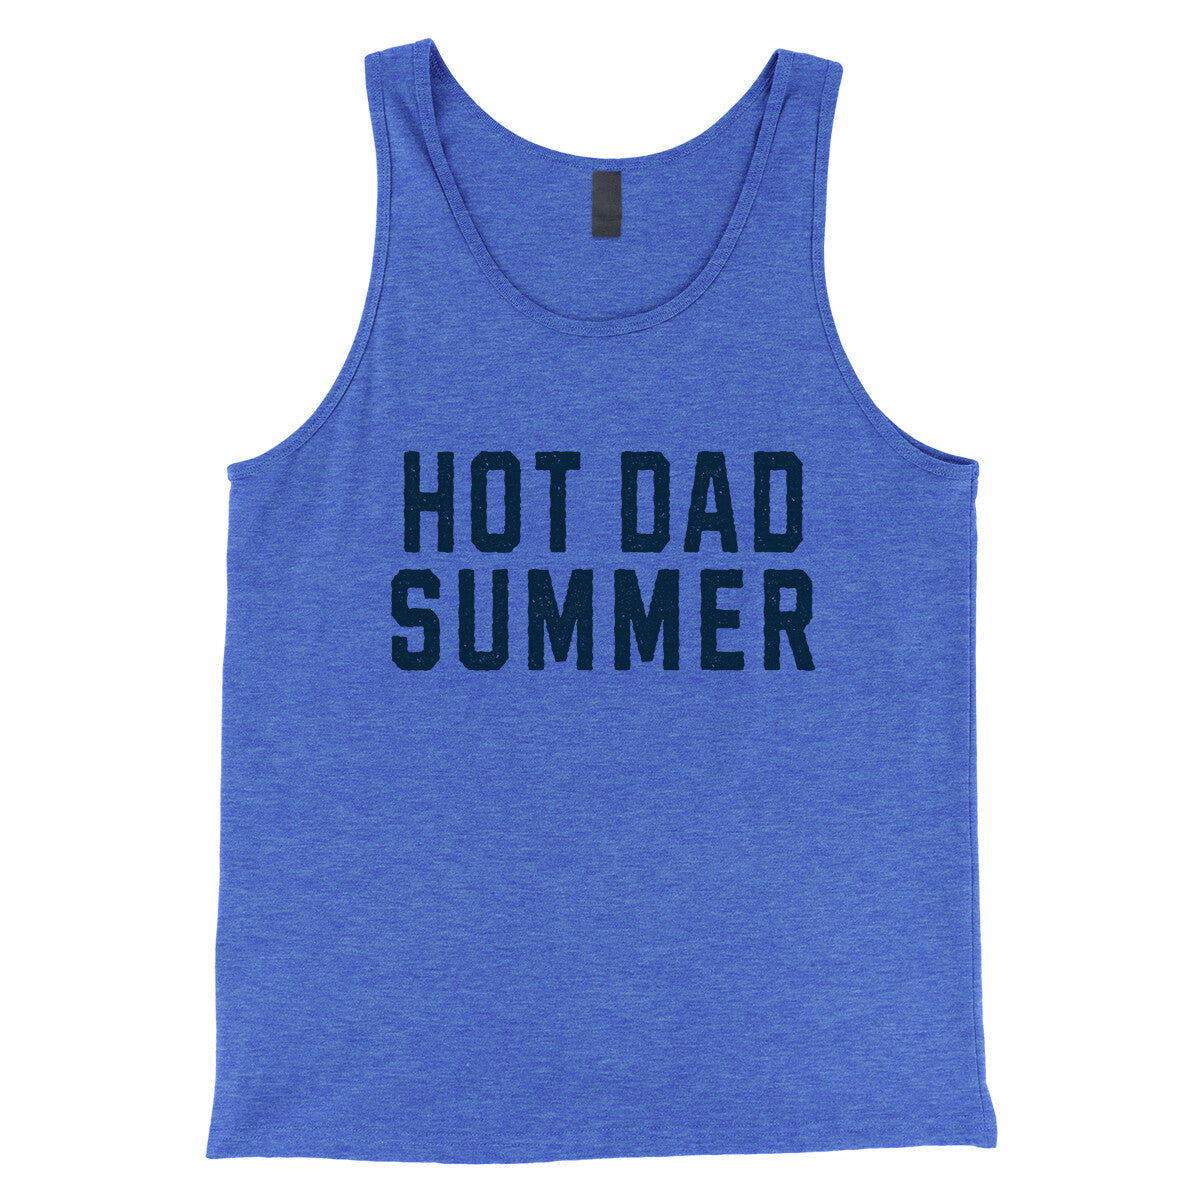 Hot Dad Summer in True Royal TriBlend Color